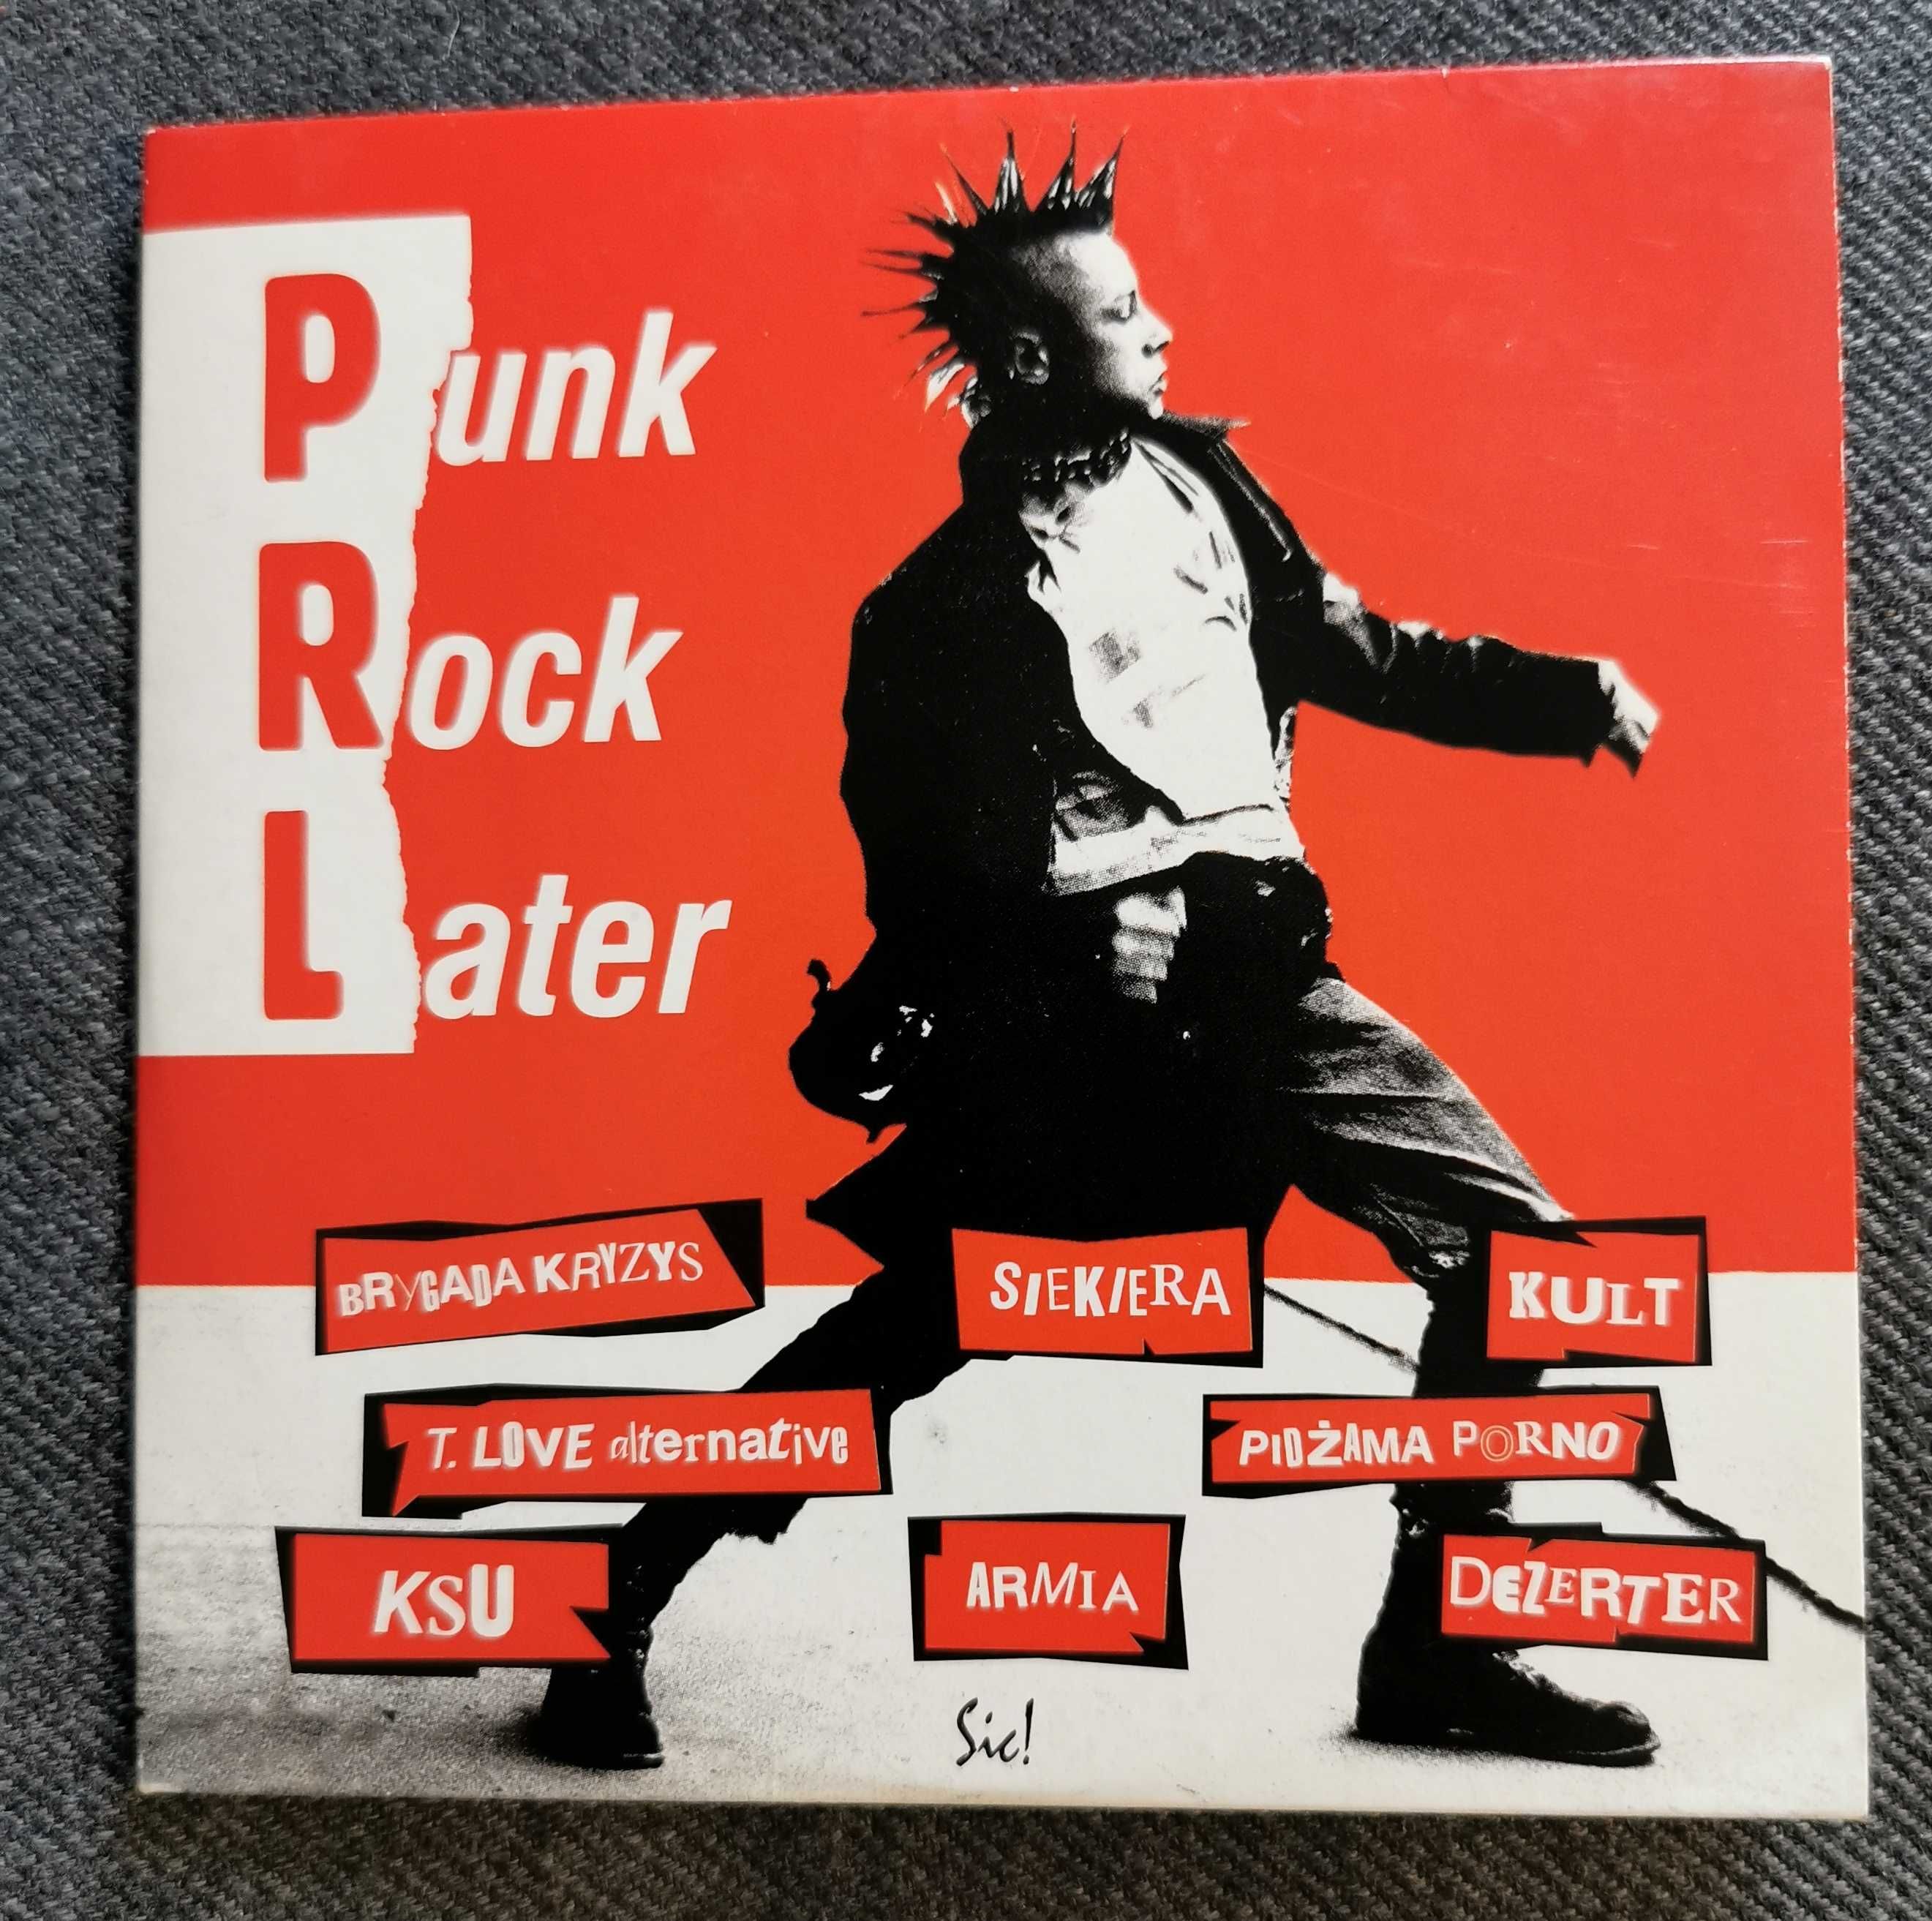 Punk rock Later armia siekiera kult ksu brygada